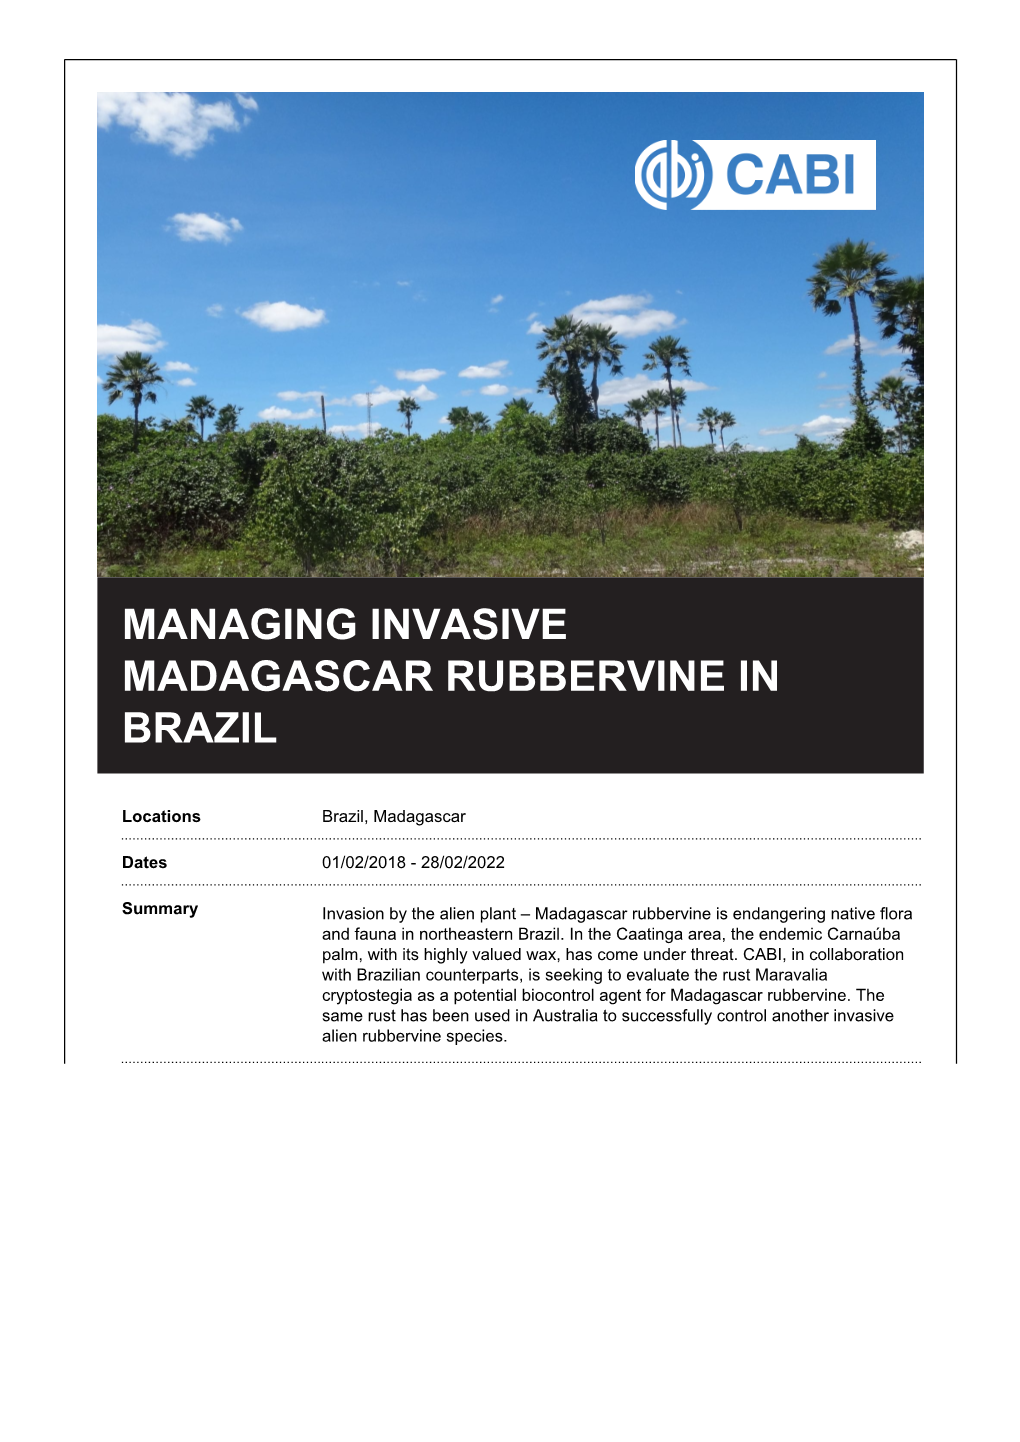 Managing Invasive Madagascar Rubbervine in Brazil